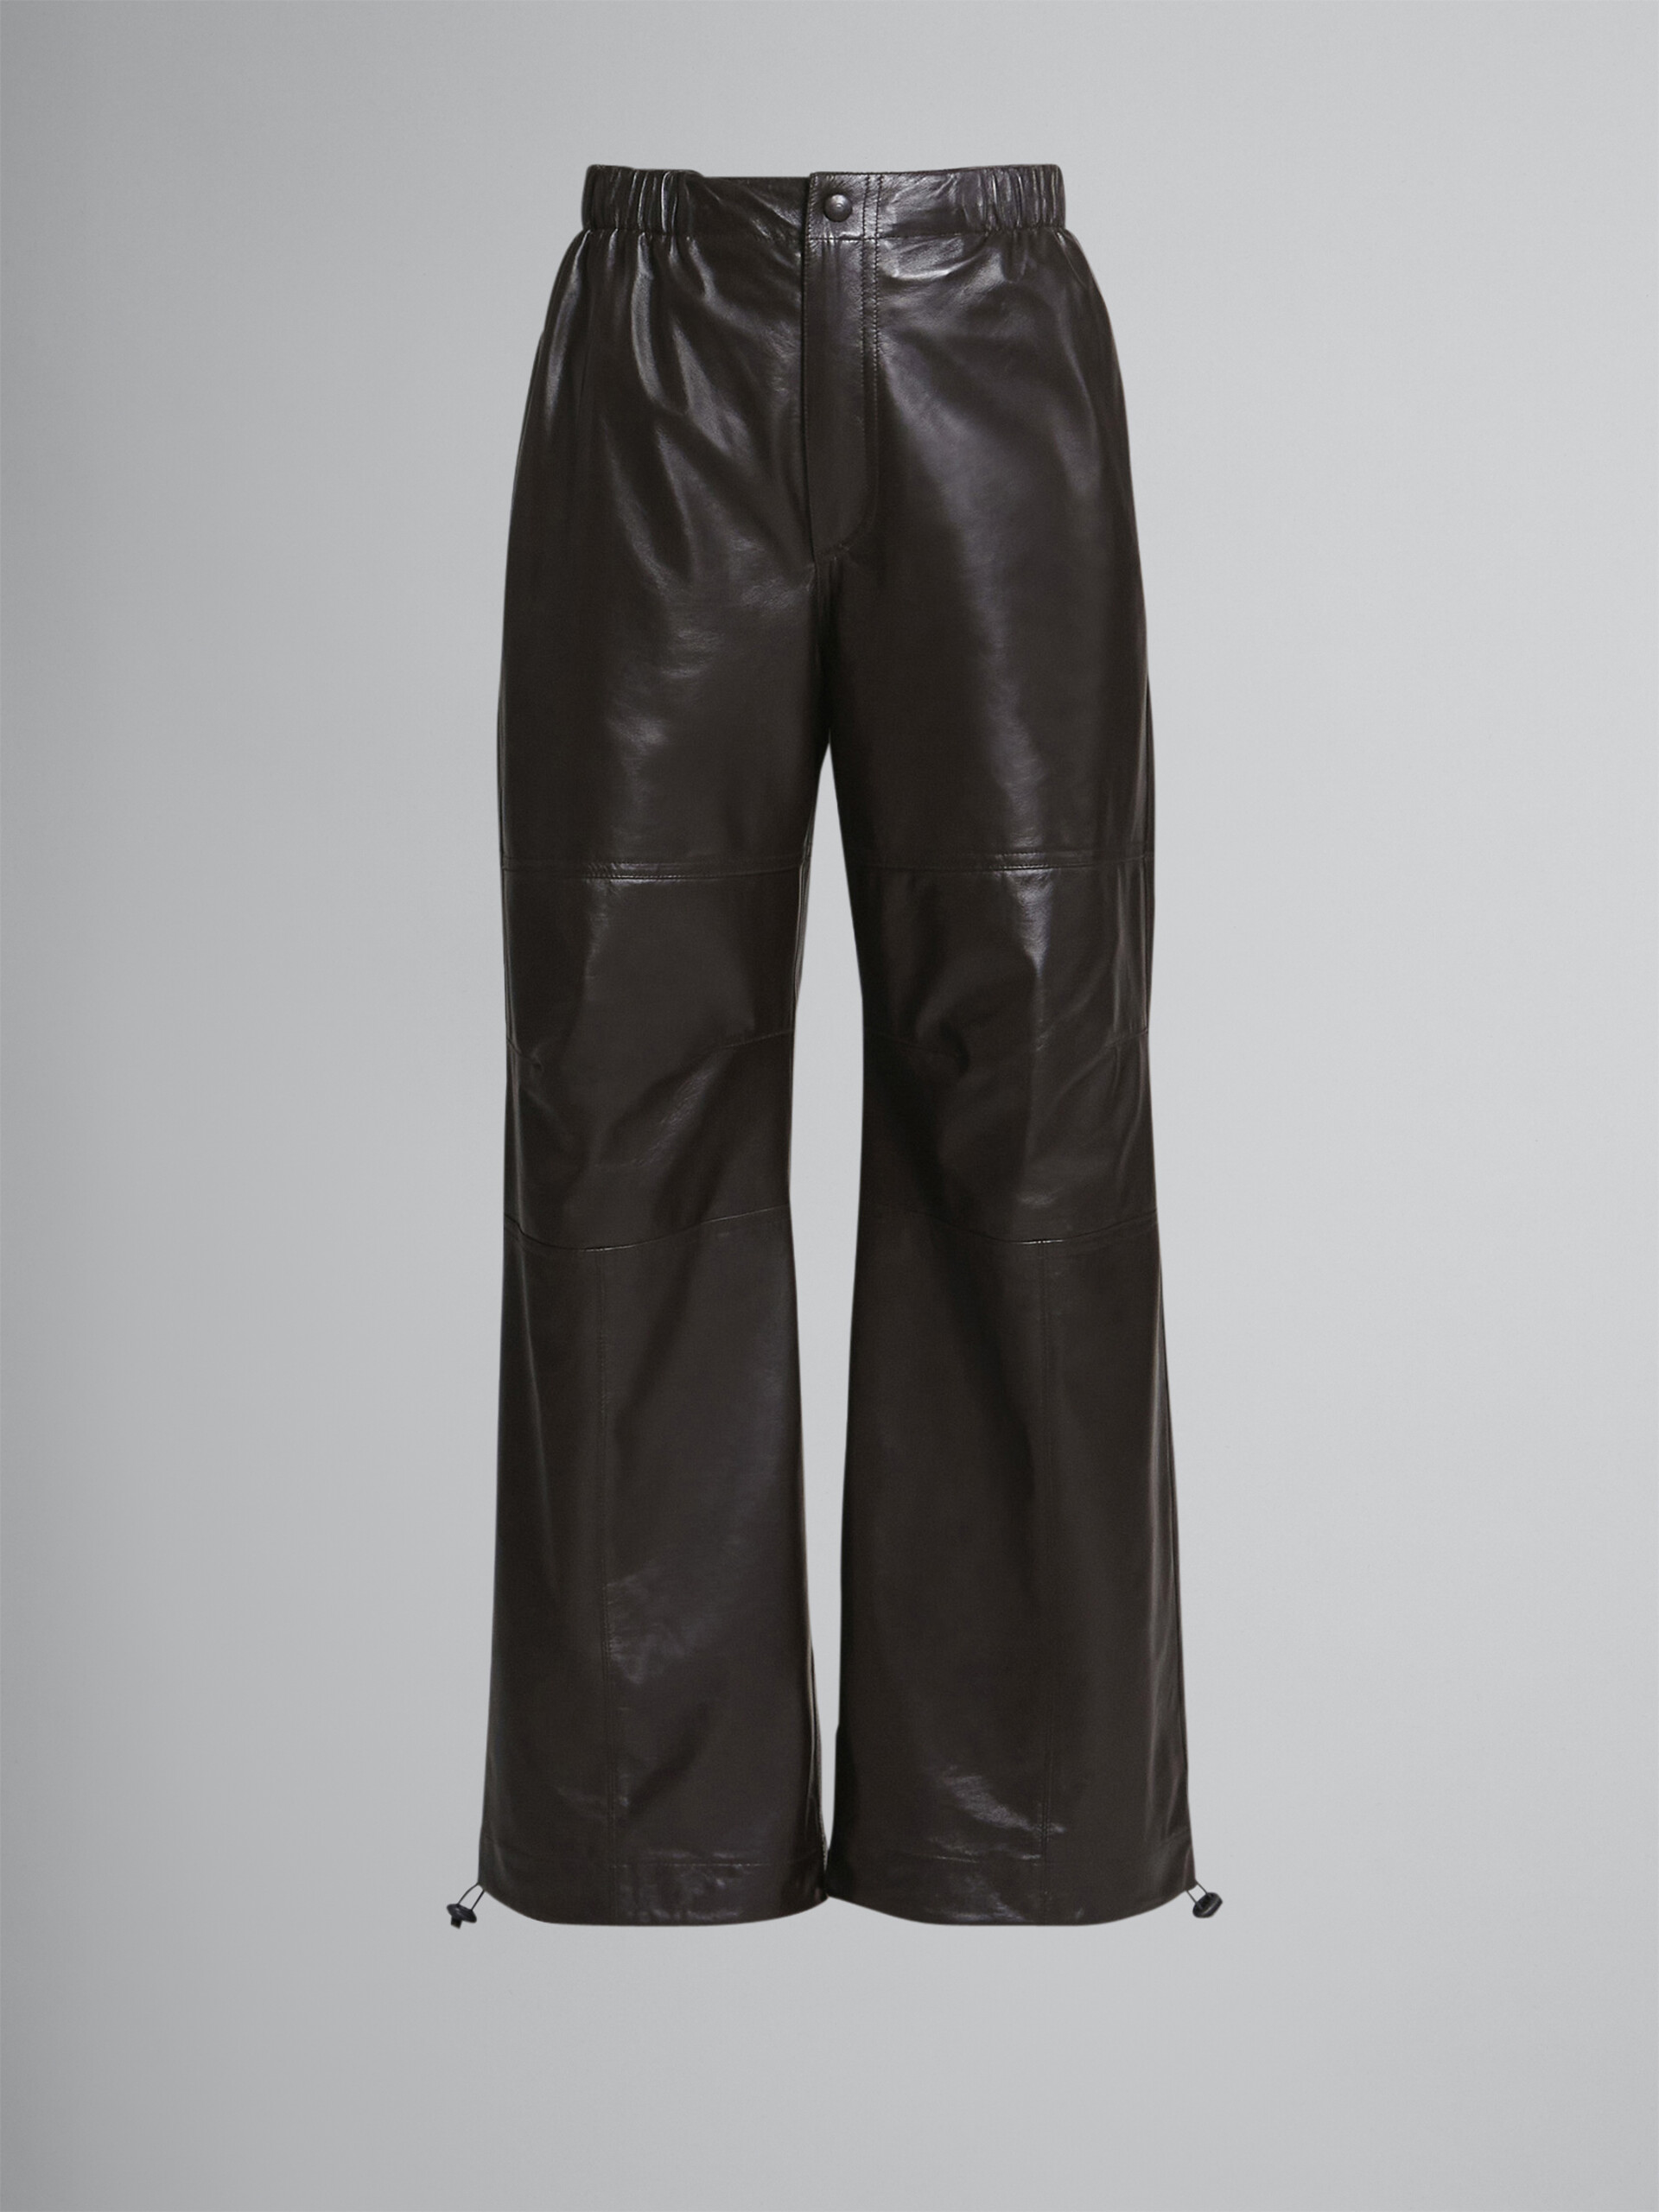 Light nappa leather cargo pants - Pants - Image 1